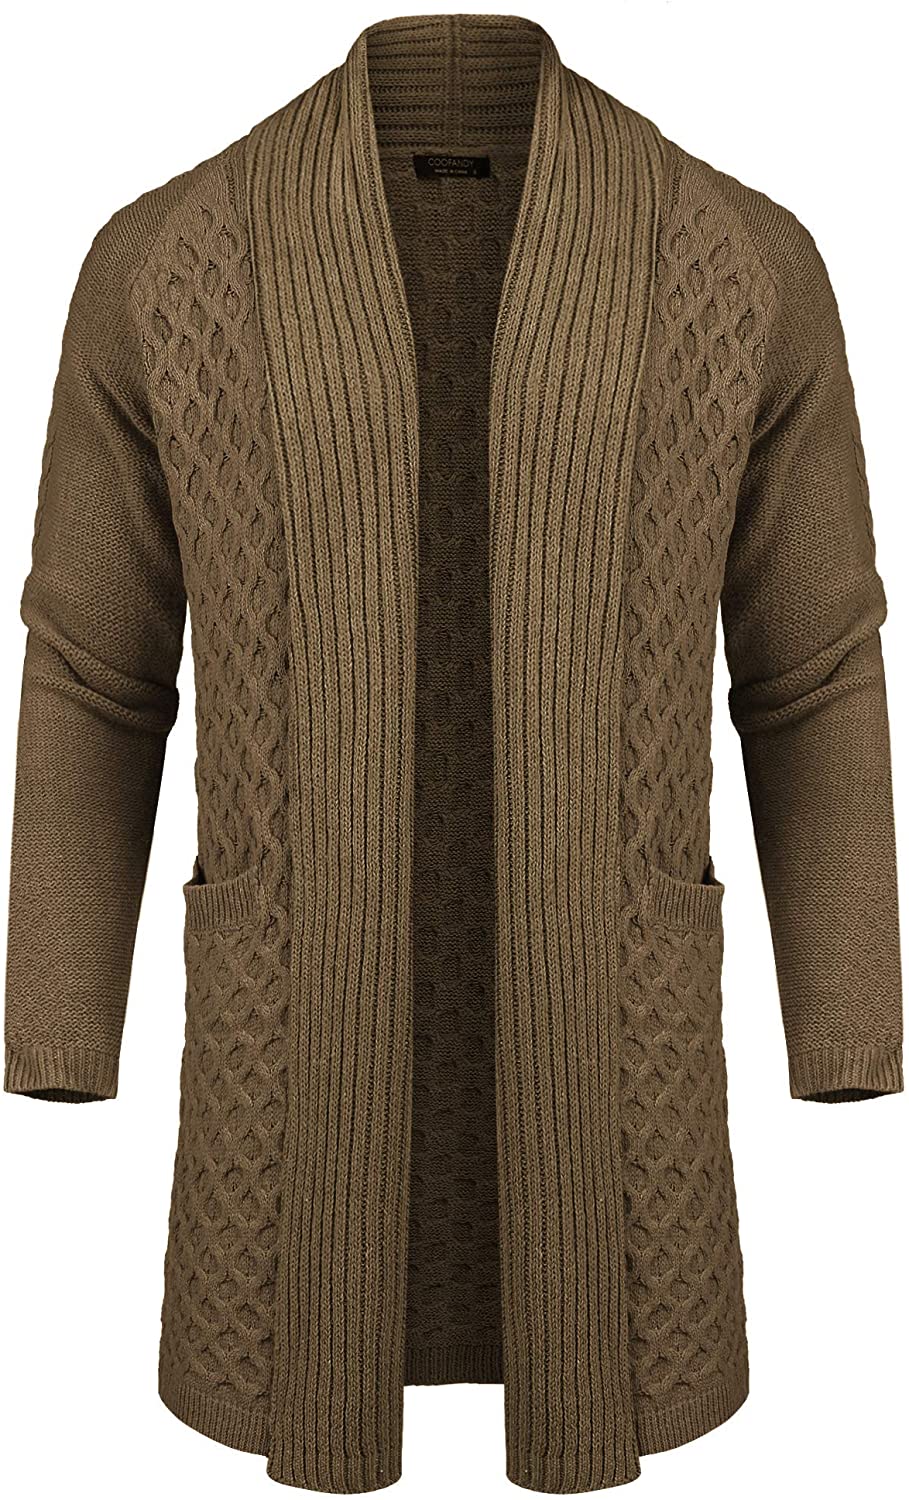 COOFANDY Mens Fashion Long Ruffle Knit Cardigan Lightweight Shawl Collar Sweater 